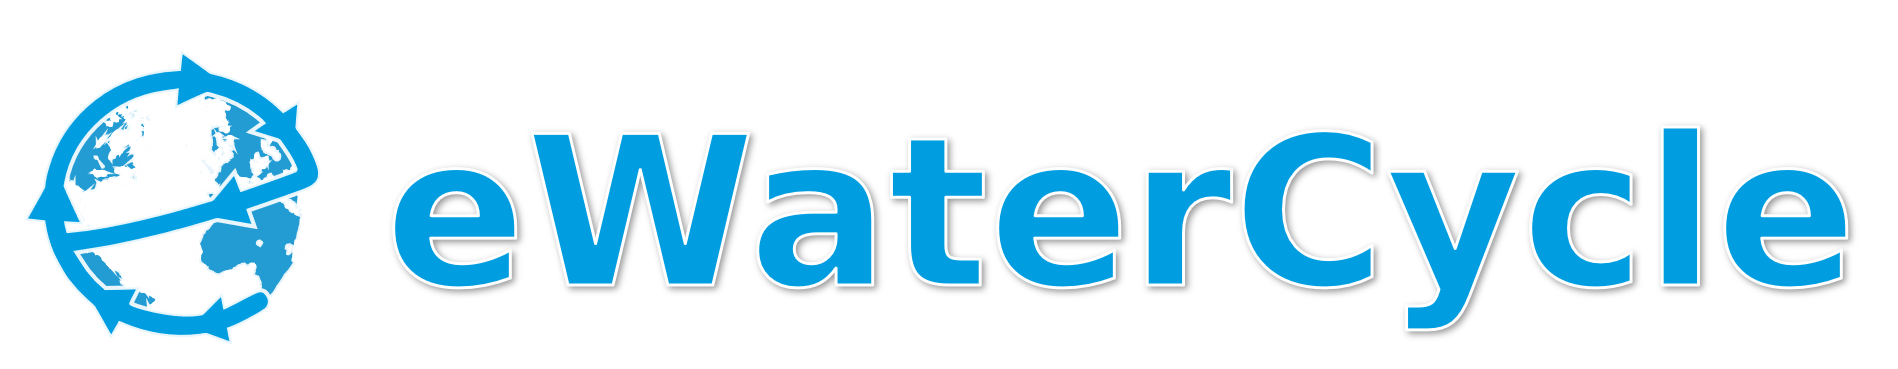 Logo for ewatercycle-wflow